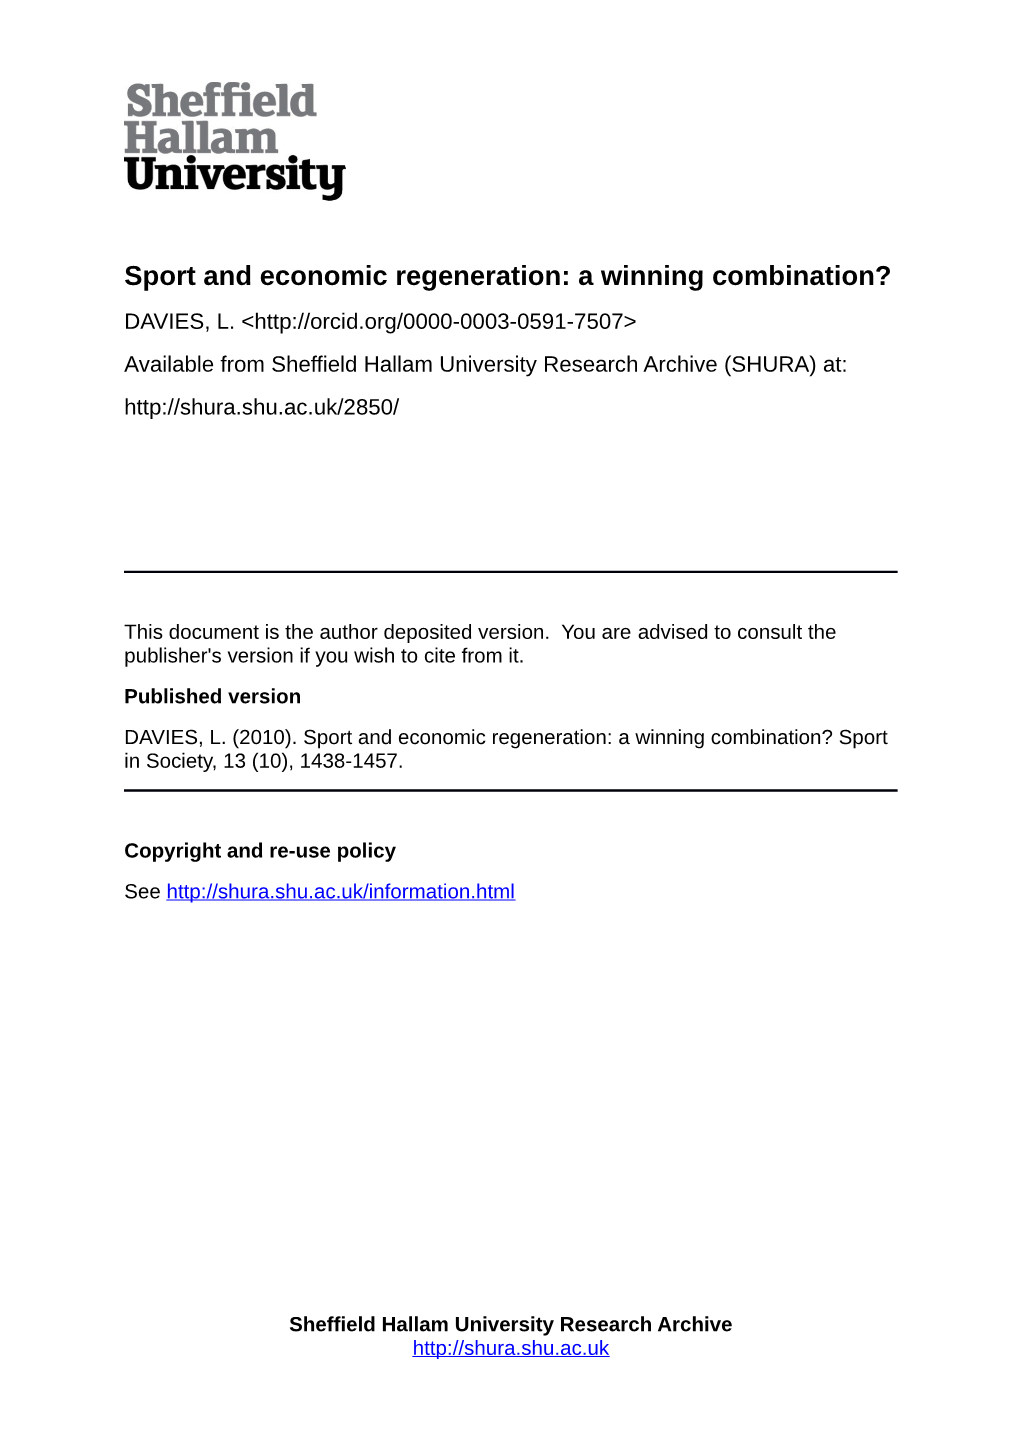 Sport and Economic Regeneration: a Winning Combination? DAVIES, L